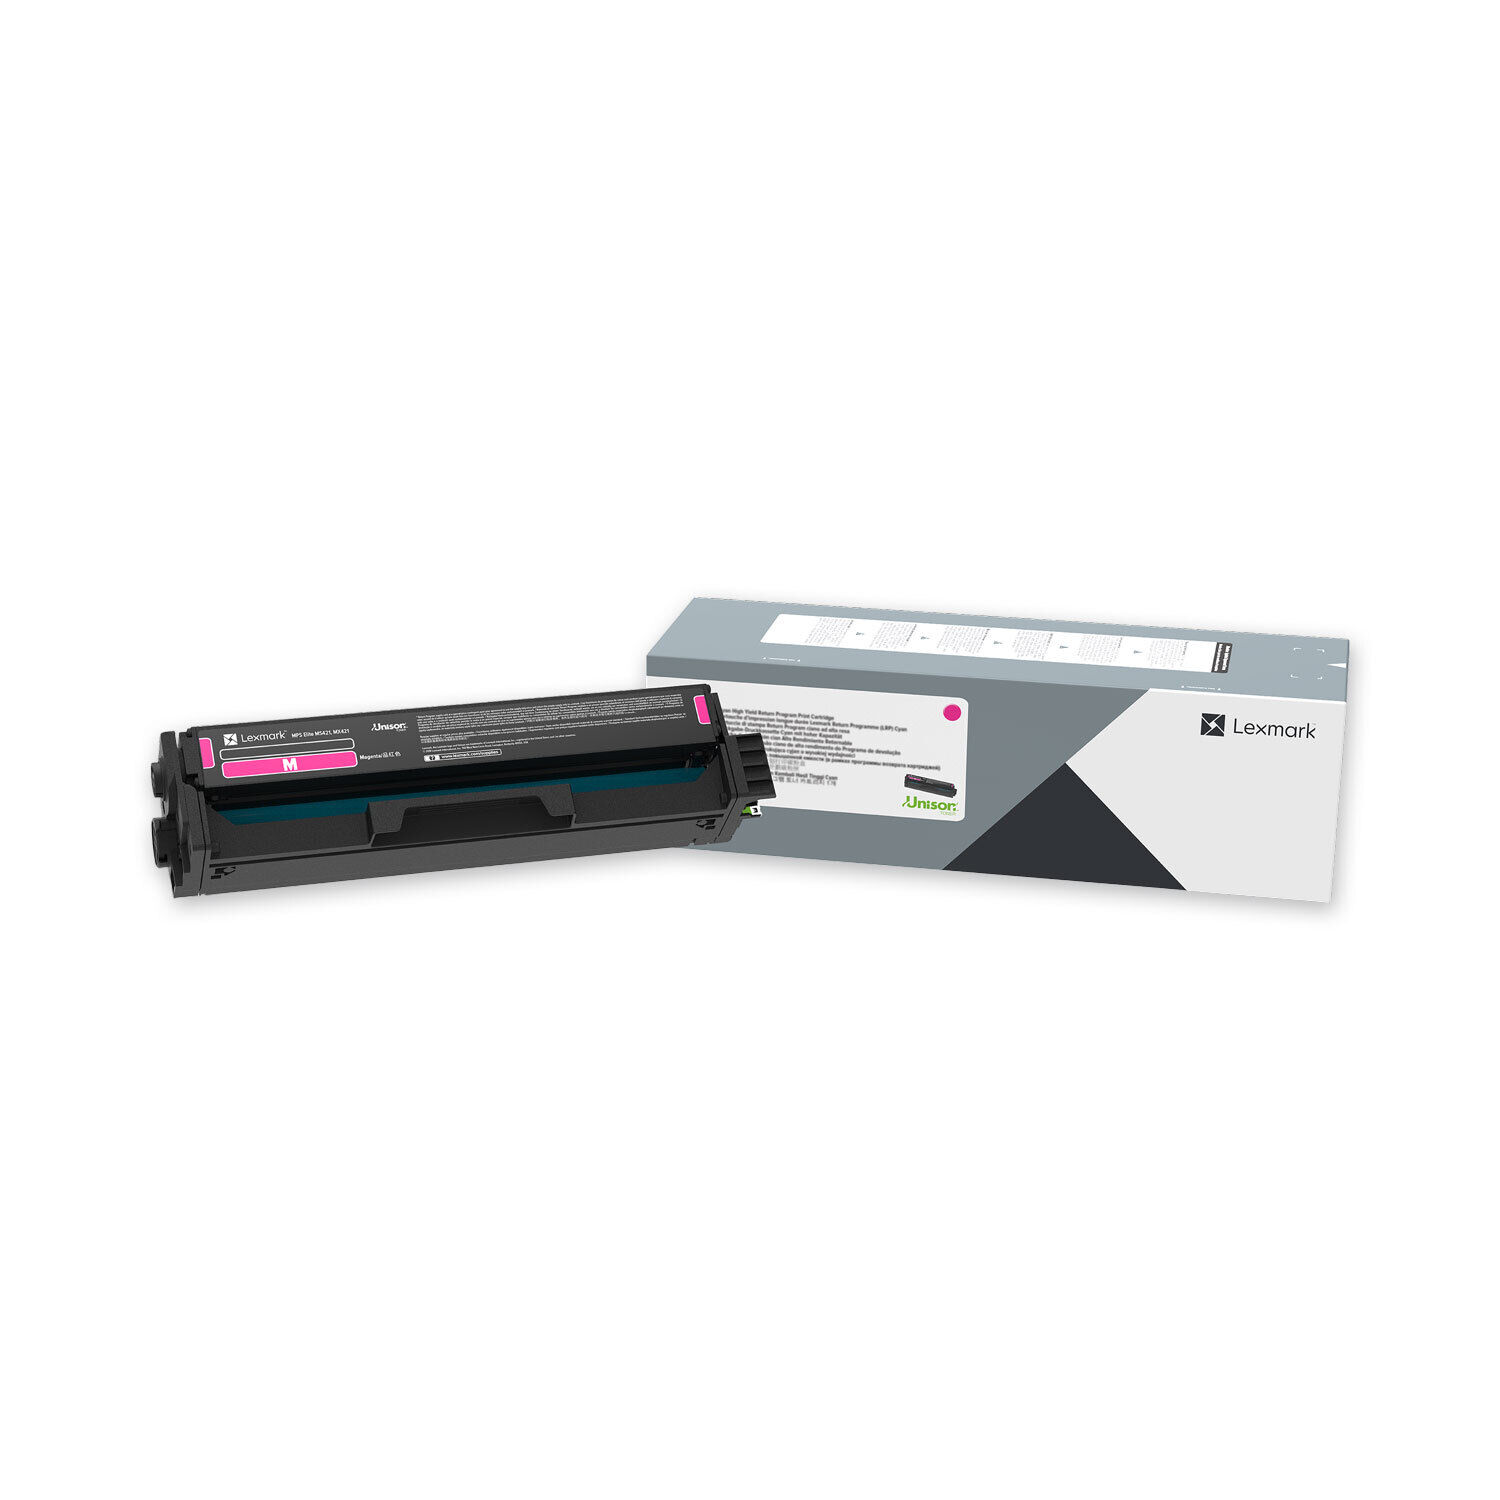 Lexmark Unison Original Extra High Yield Laser Toner Cartridge Magenta 20N1XM0